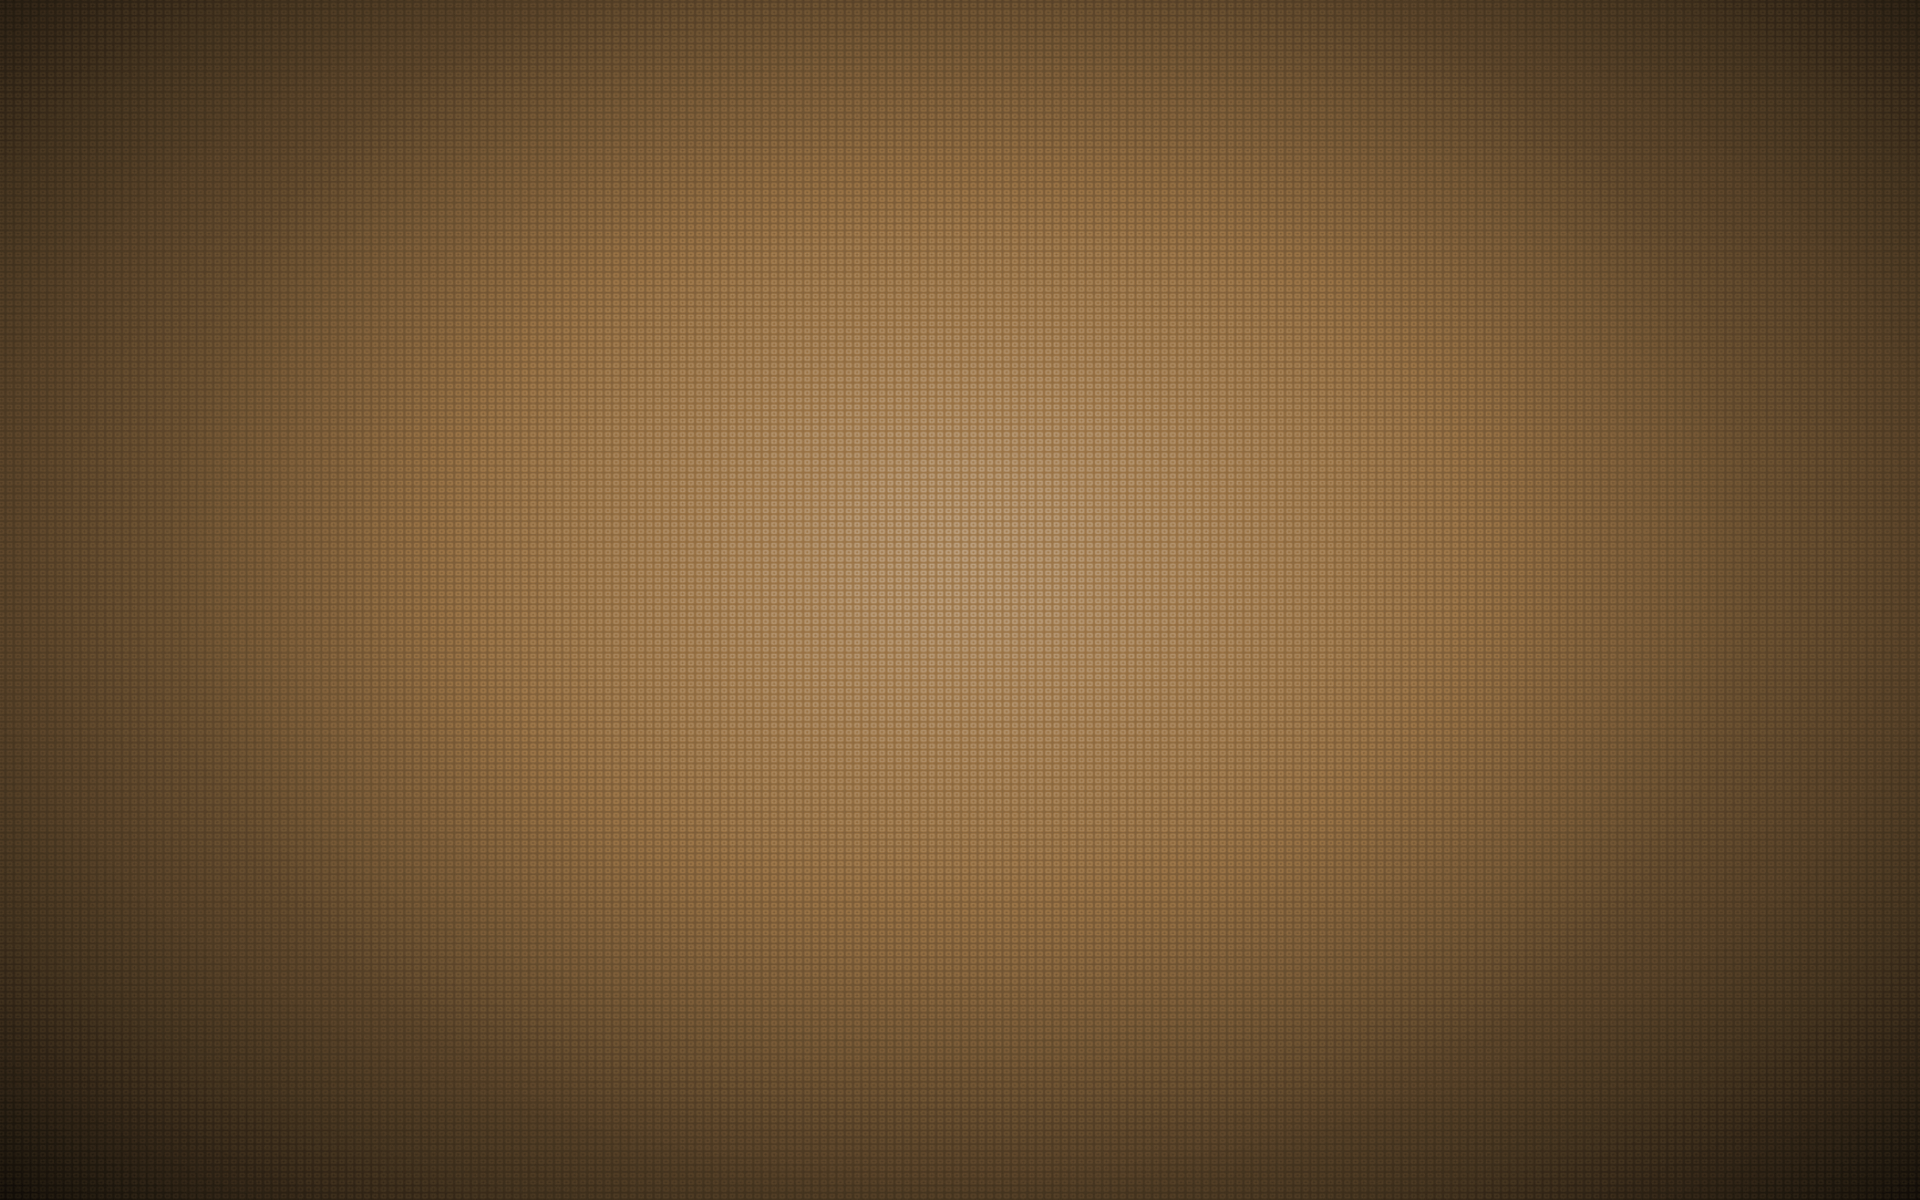 General 1920x1200 minimalism texture pattern simple background digital brown background grid